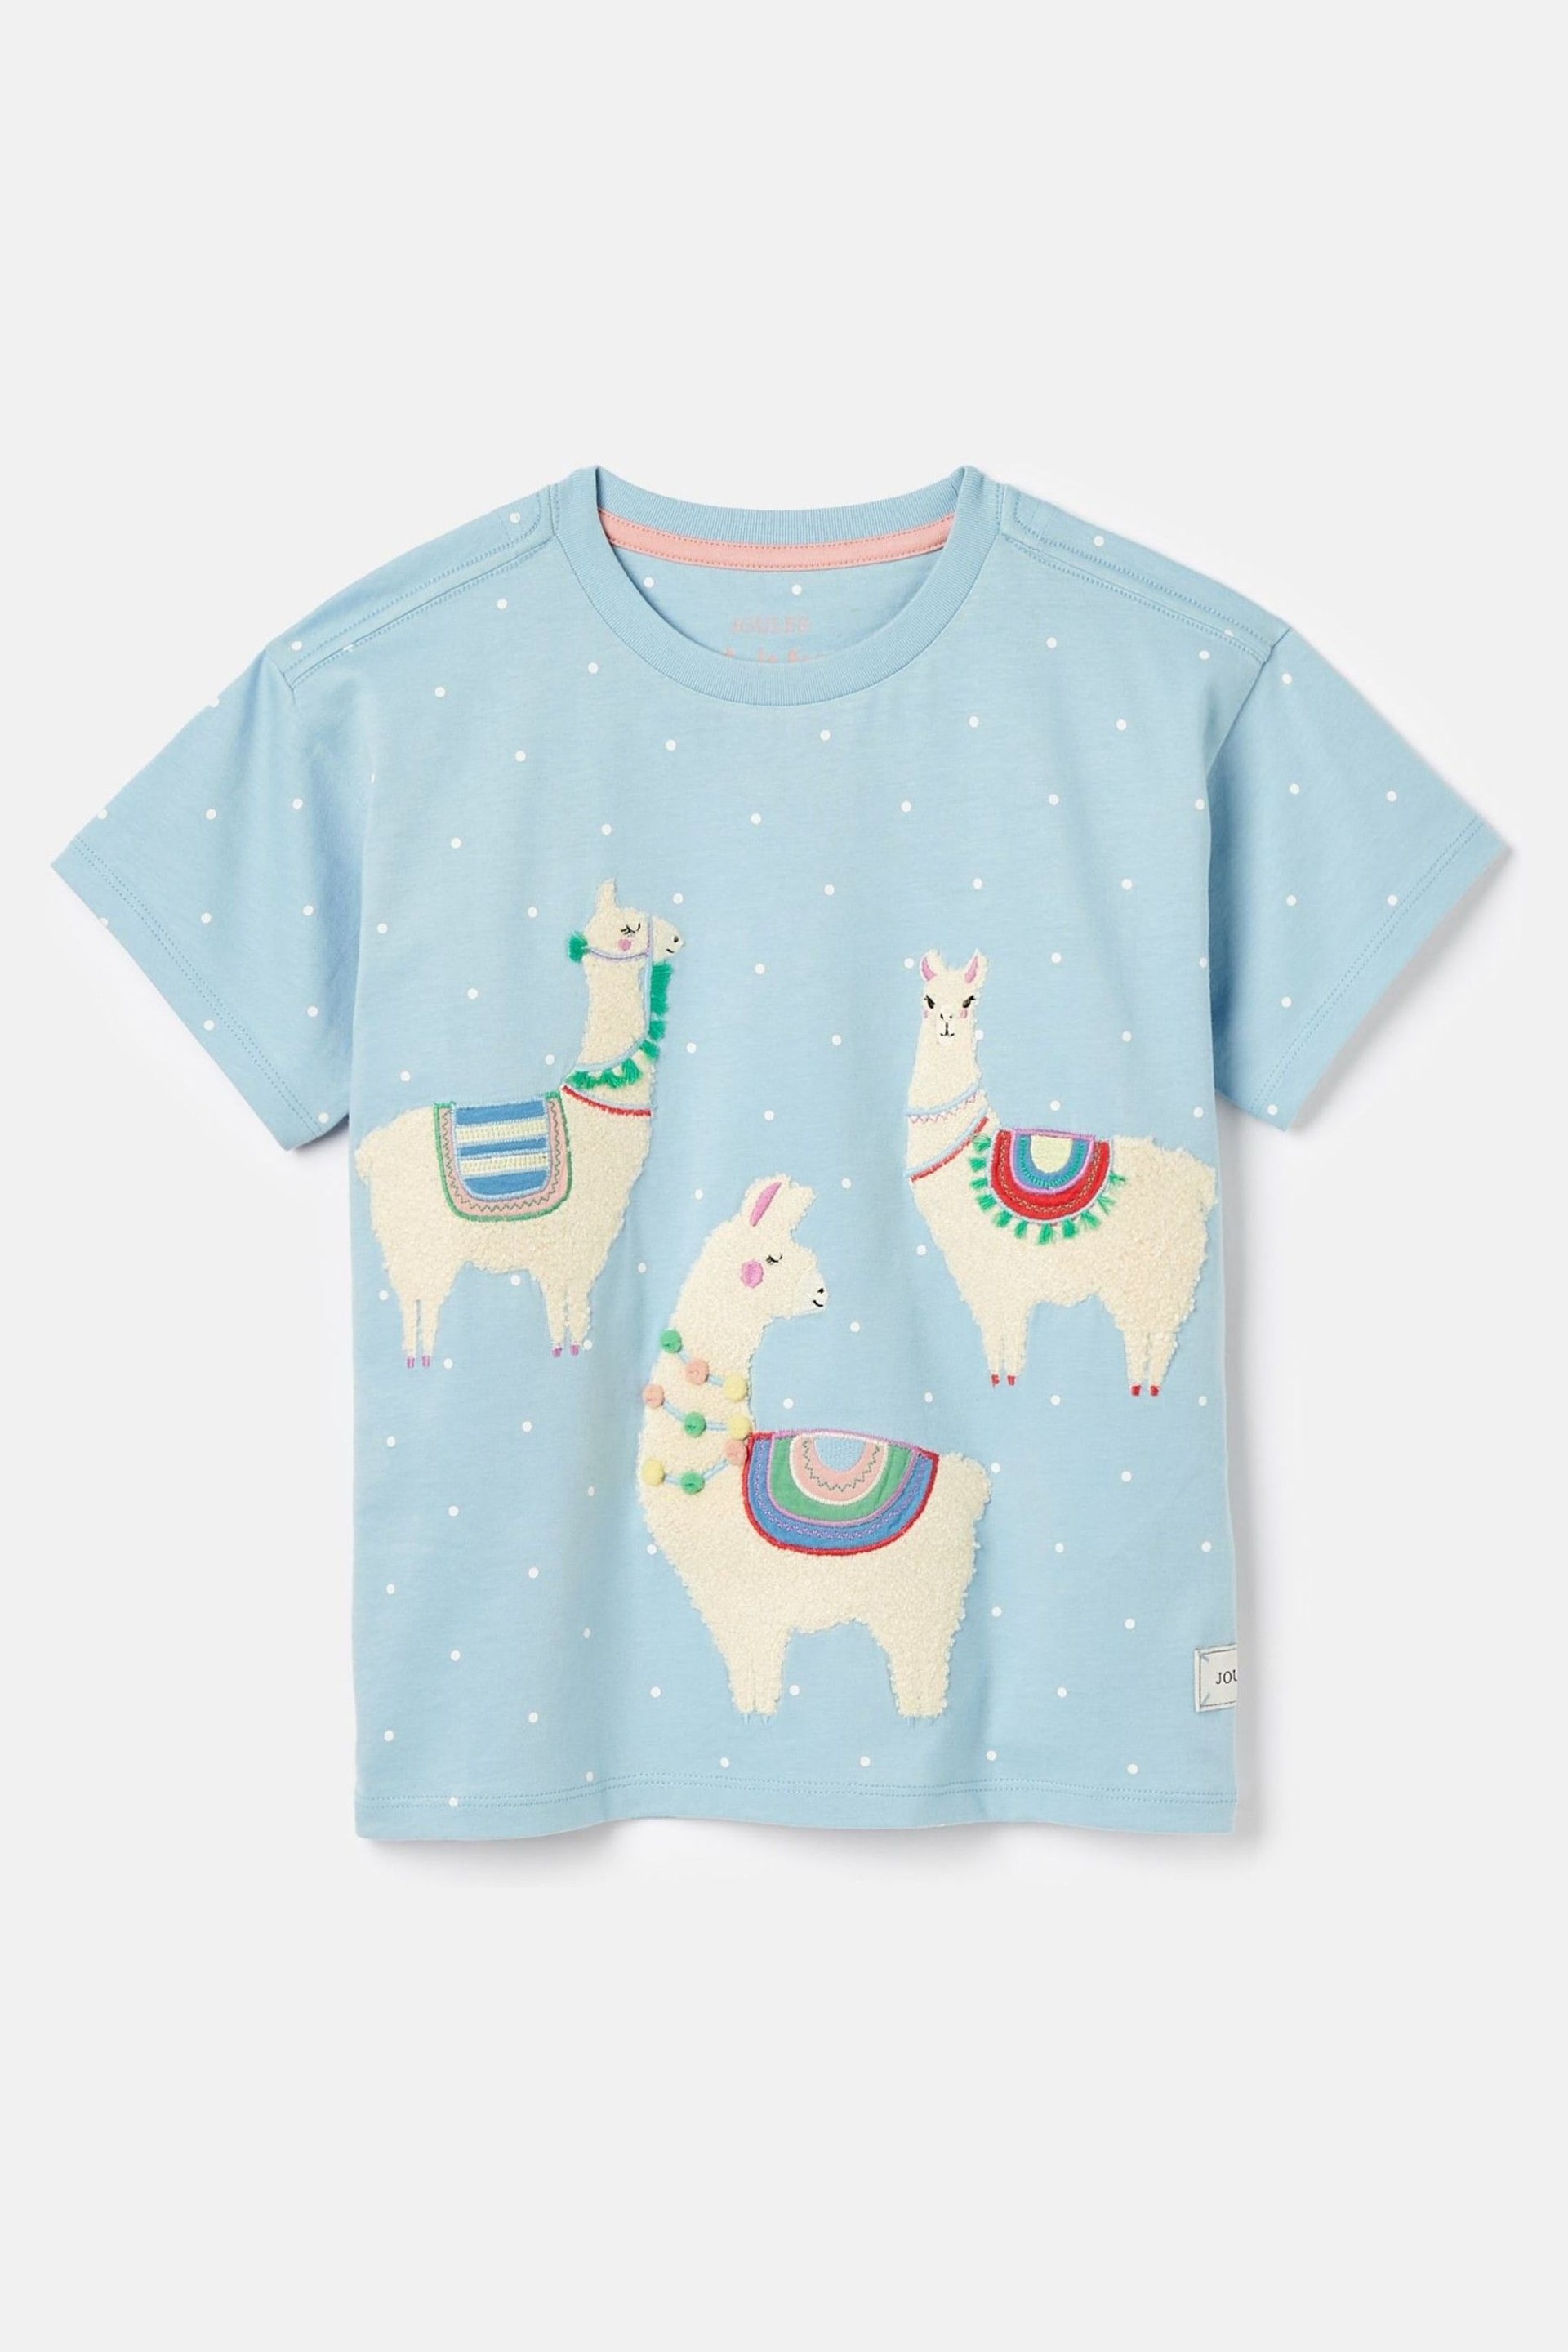 Joules Astra Blue Llama Short Sleeve Artwork T-Shirt - Image 1 of 5